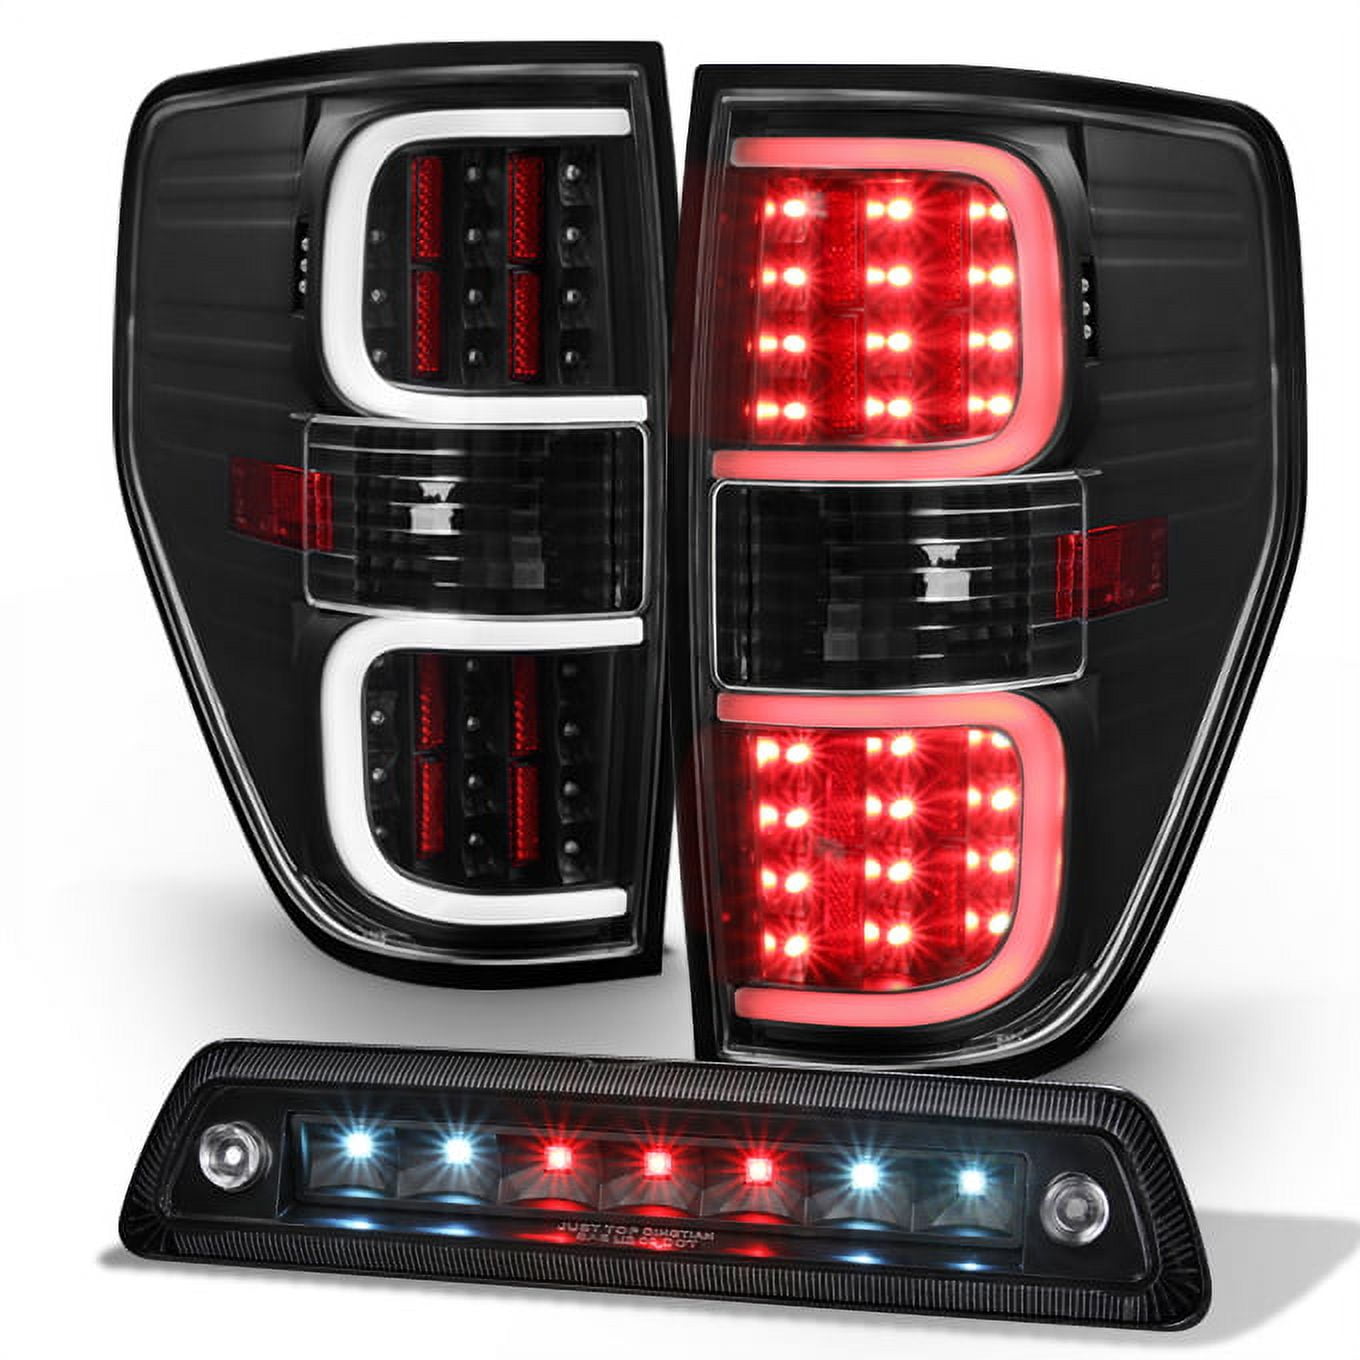 3BL-HRID06-LED-BK Black Housing ZS23 LED Third Tail Brake Light